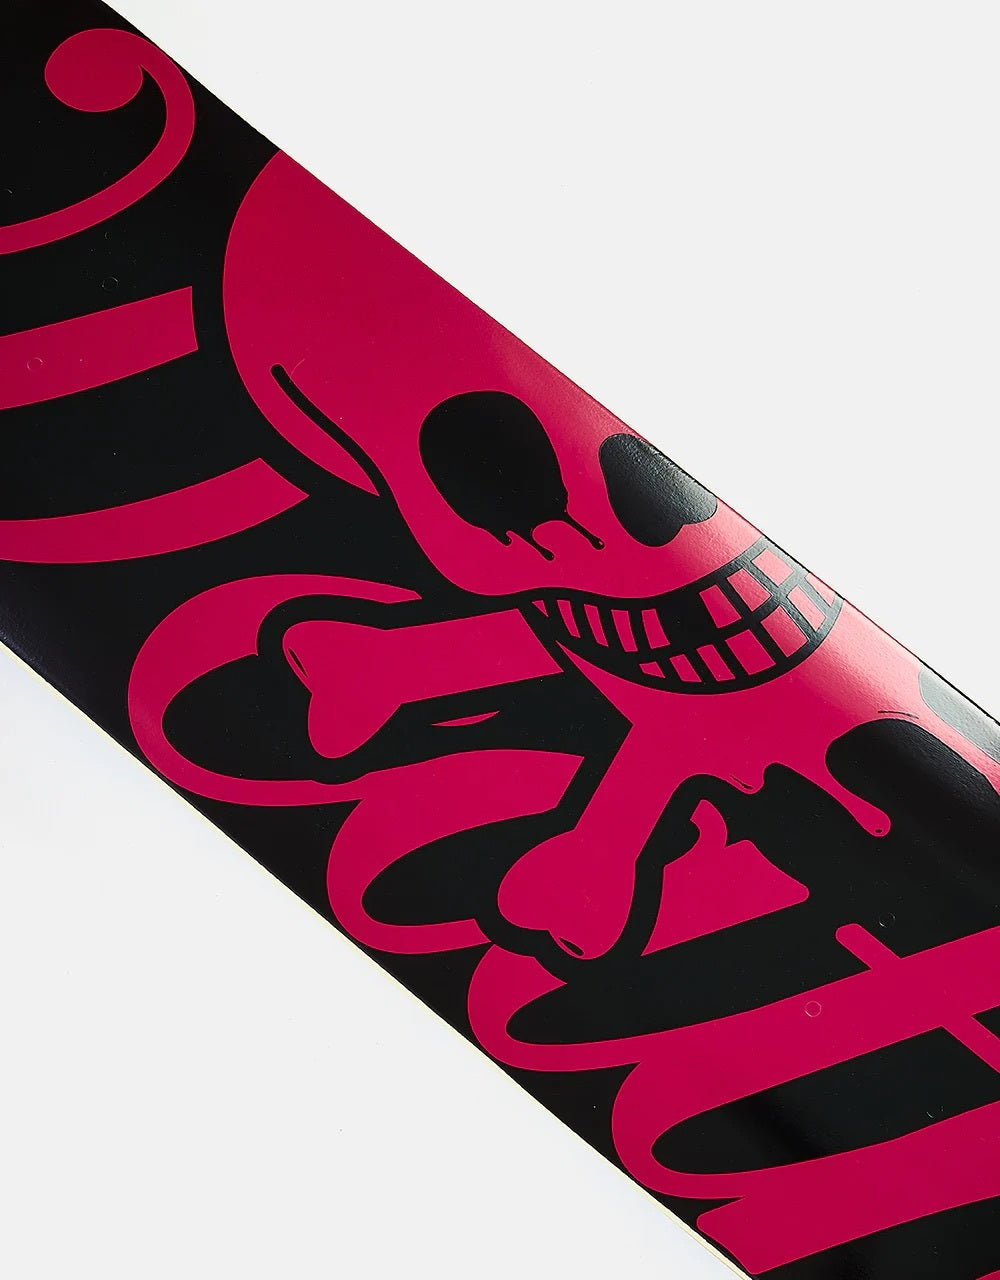 Death Script Skateboard Deck - Black/Pink